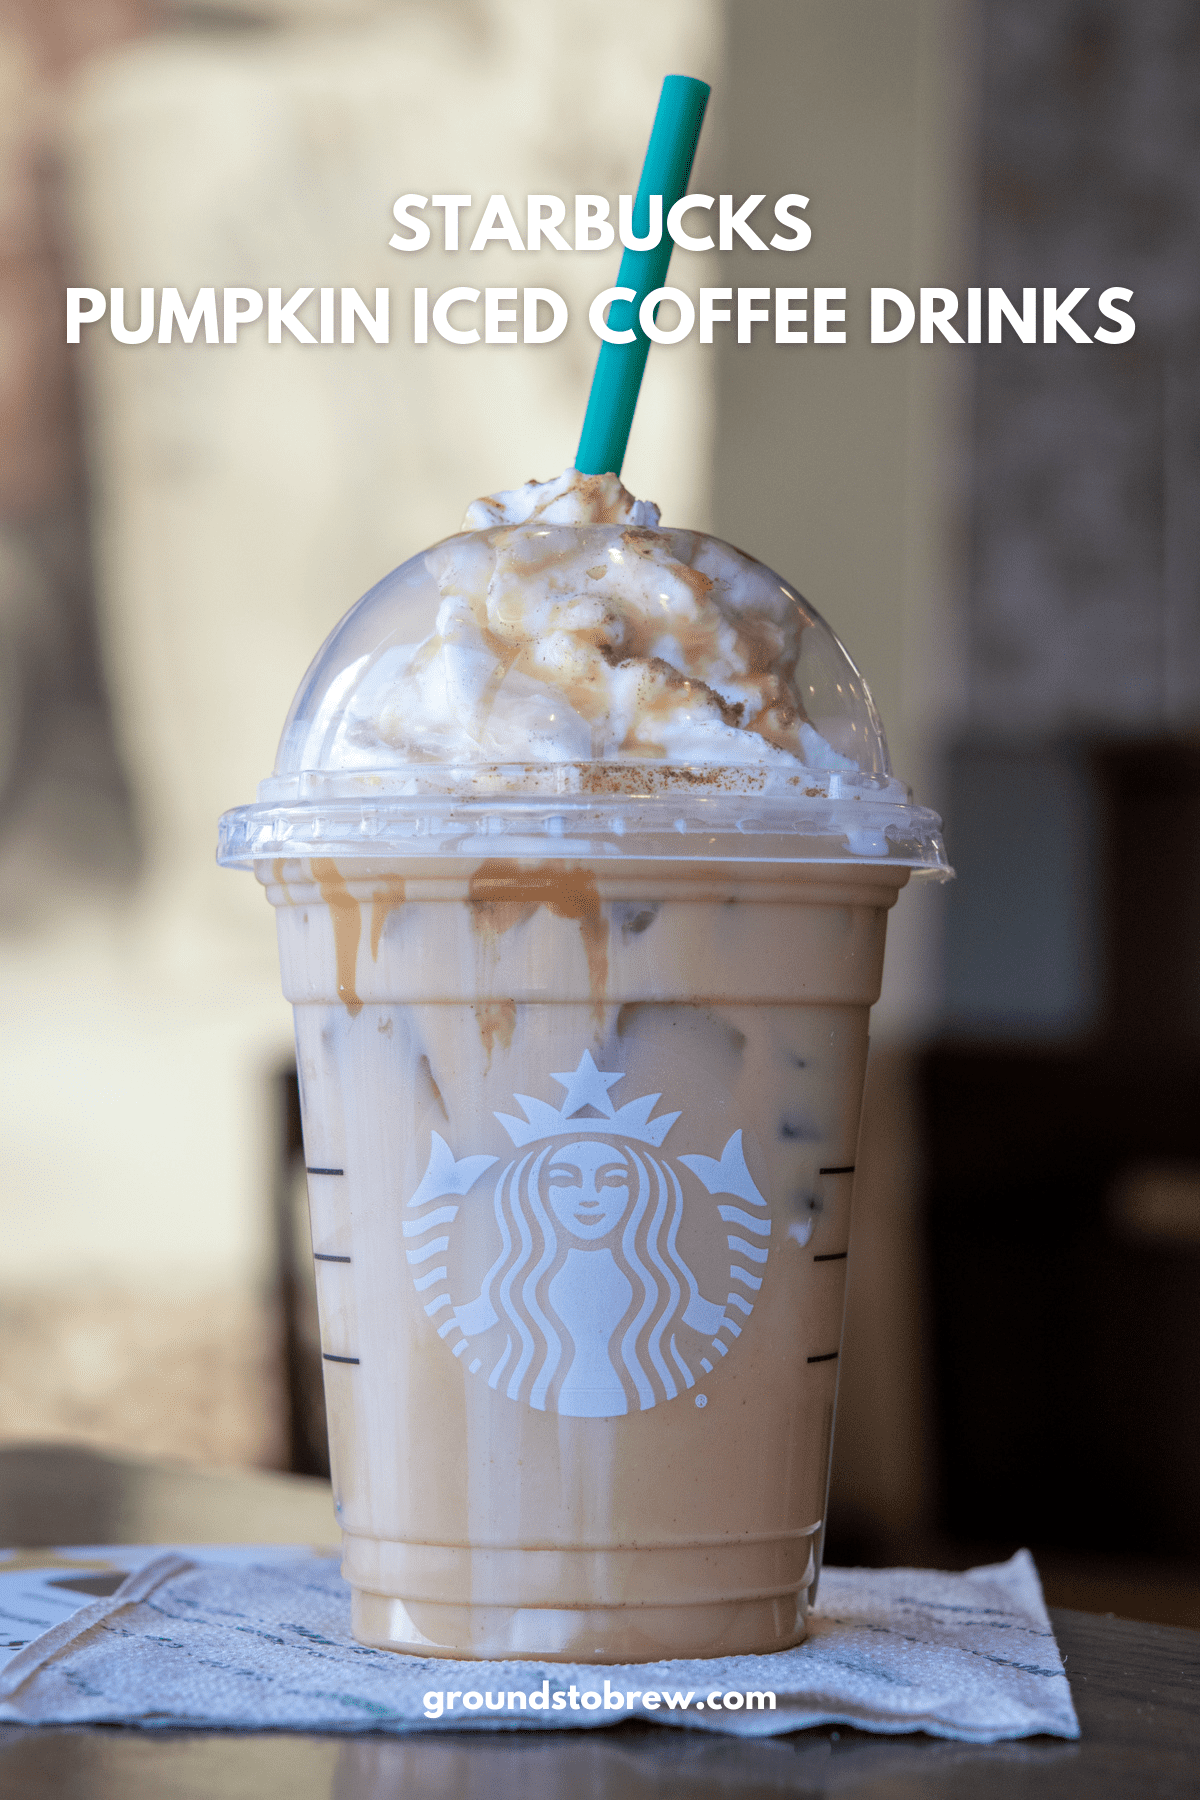 Starbucks Pumpkin Iced Coffee drinks.